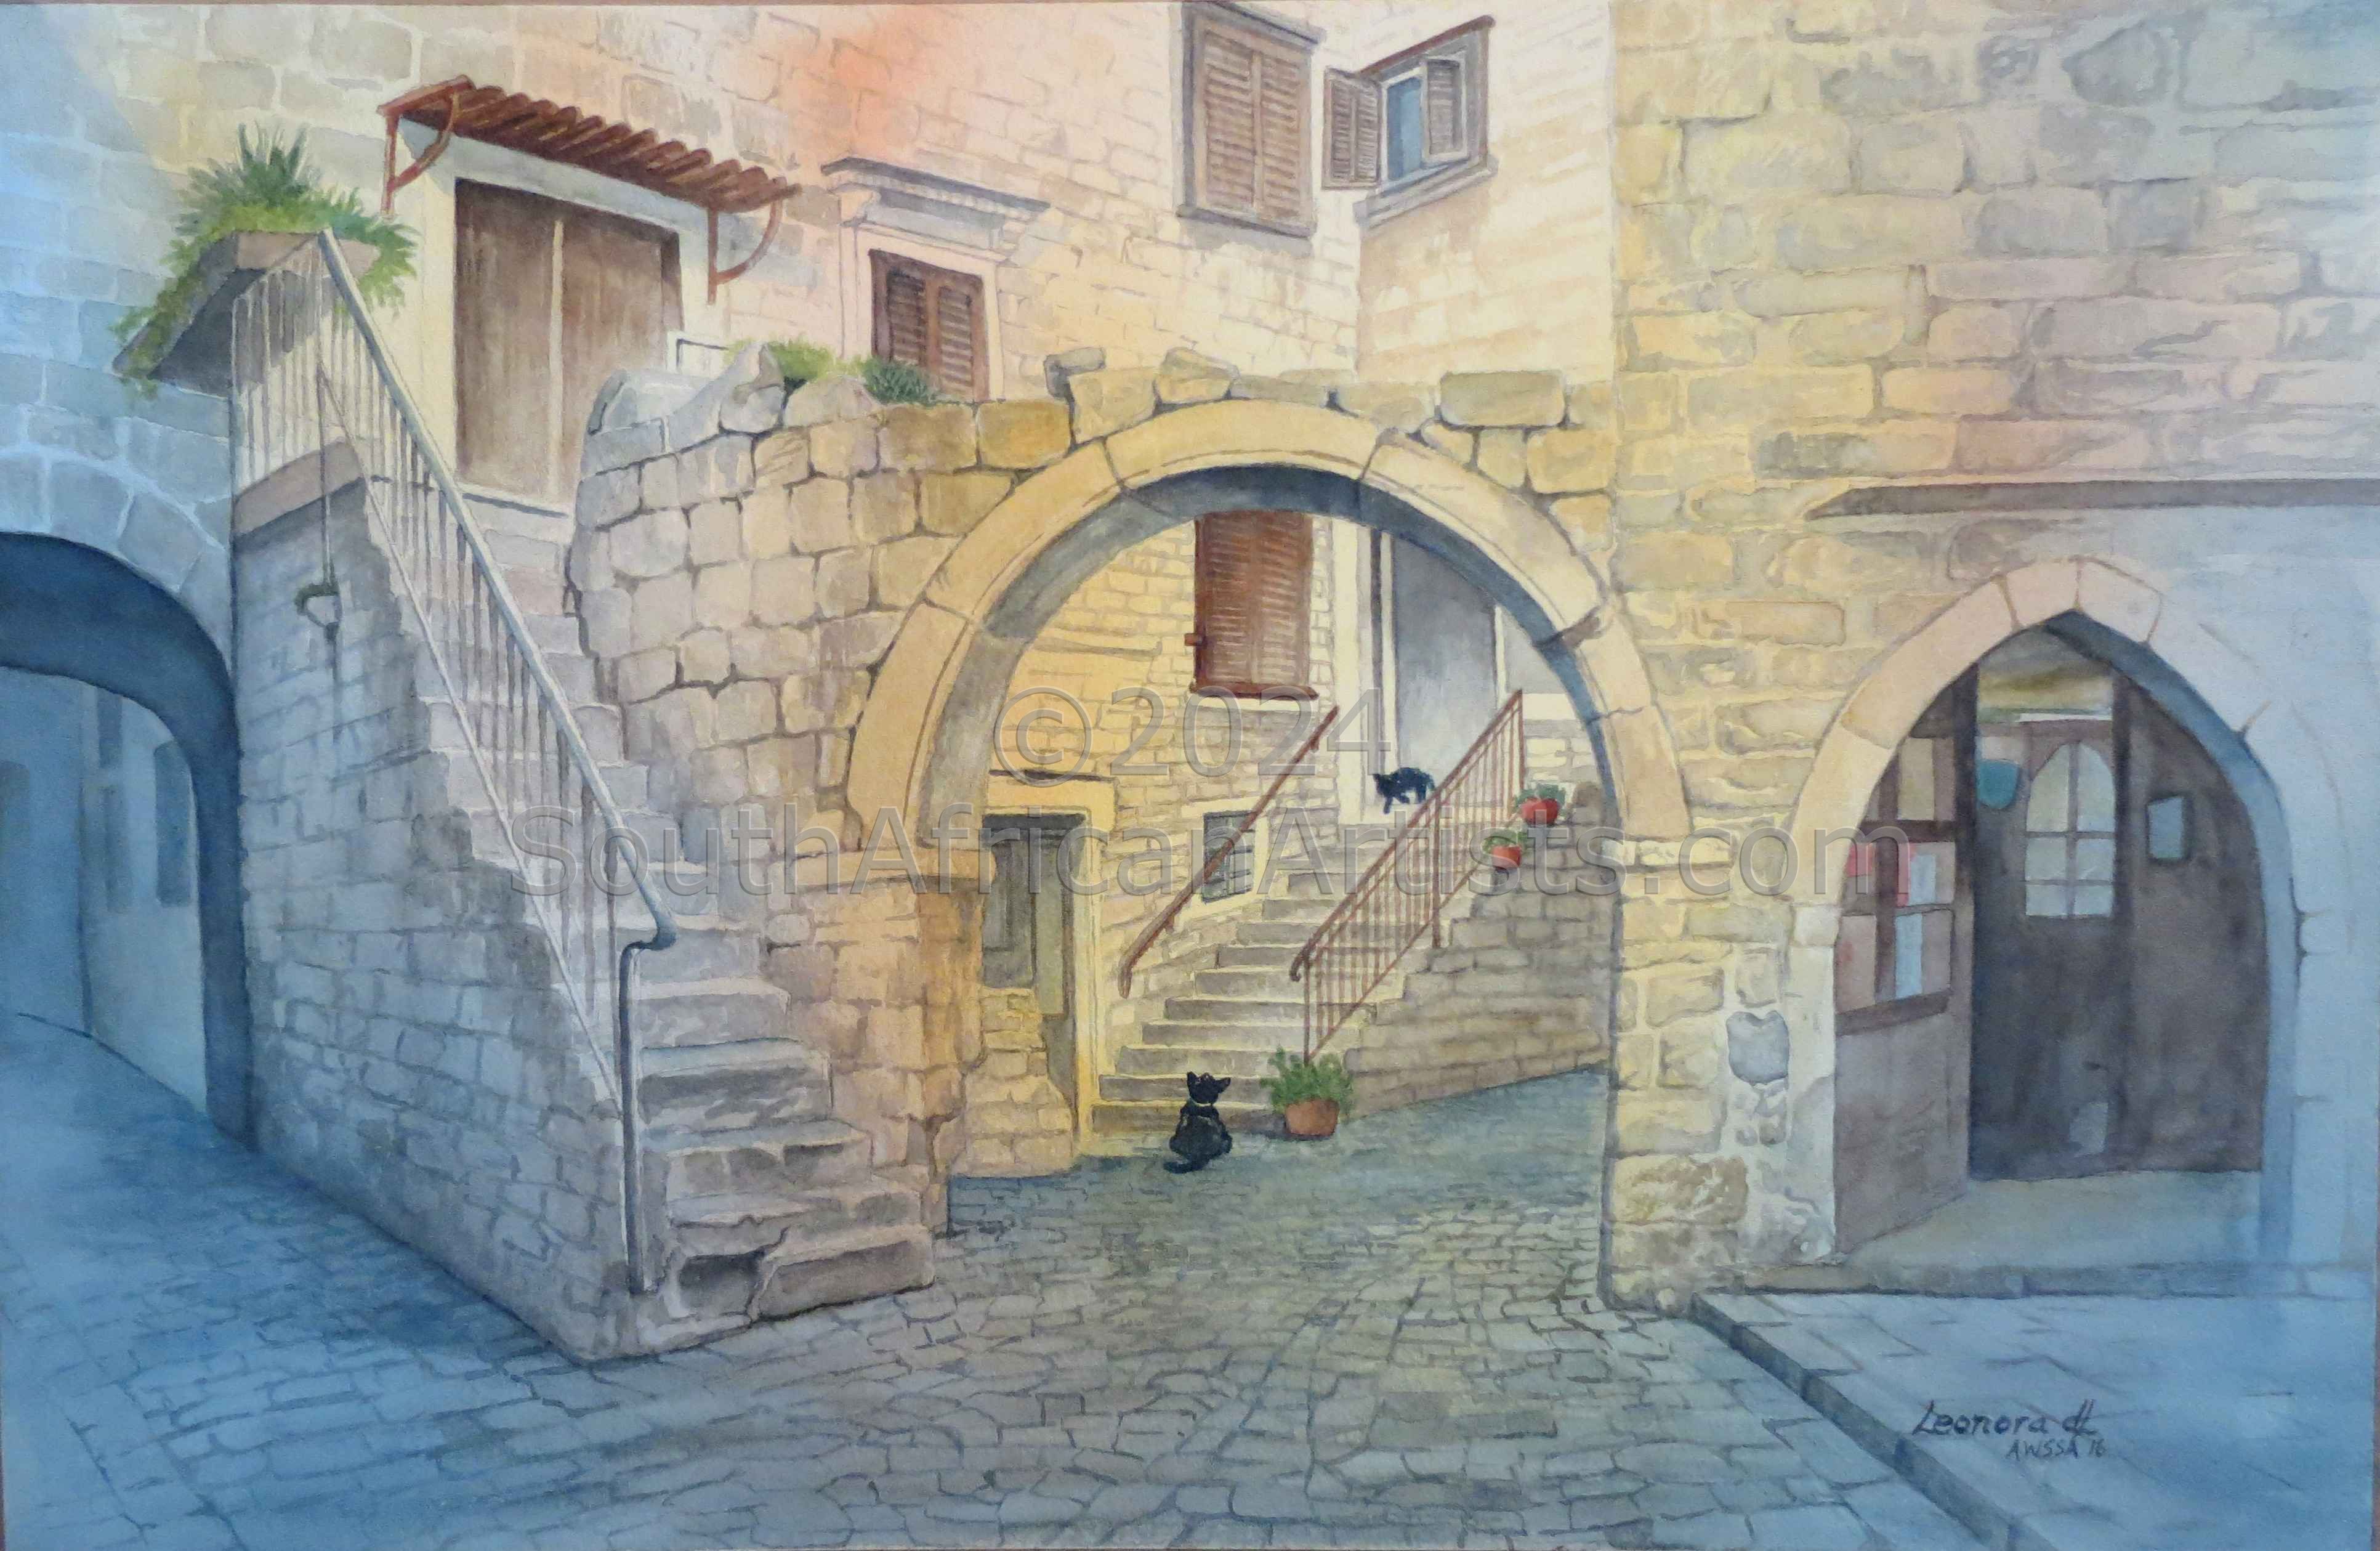 Home Through the Archway - Trogir